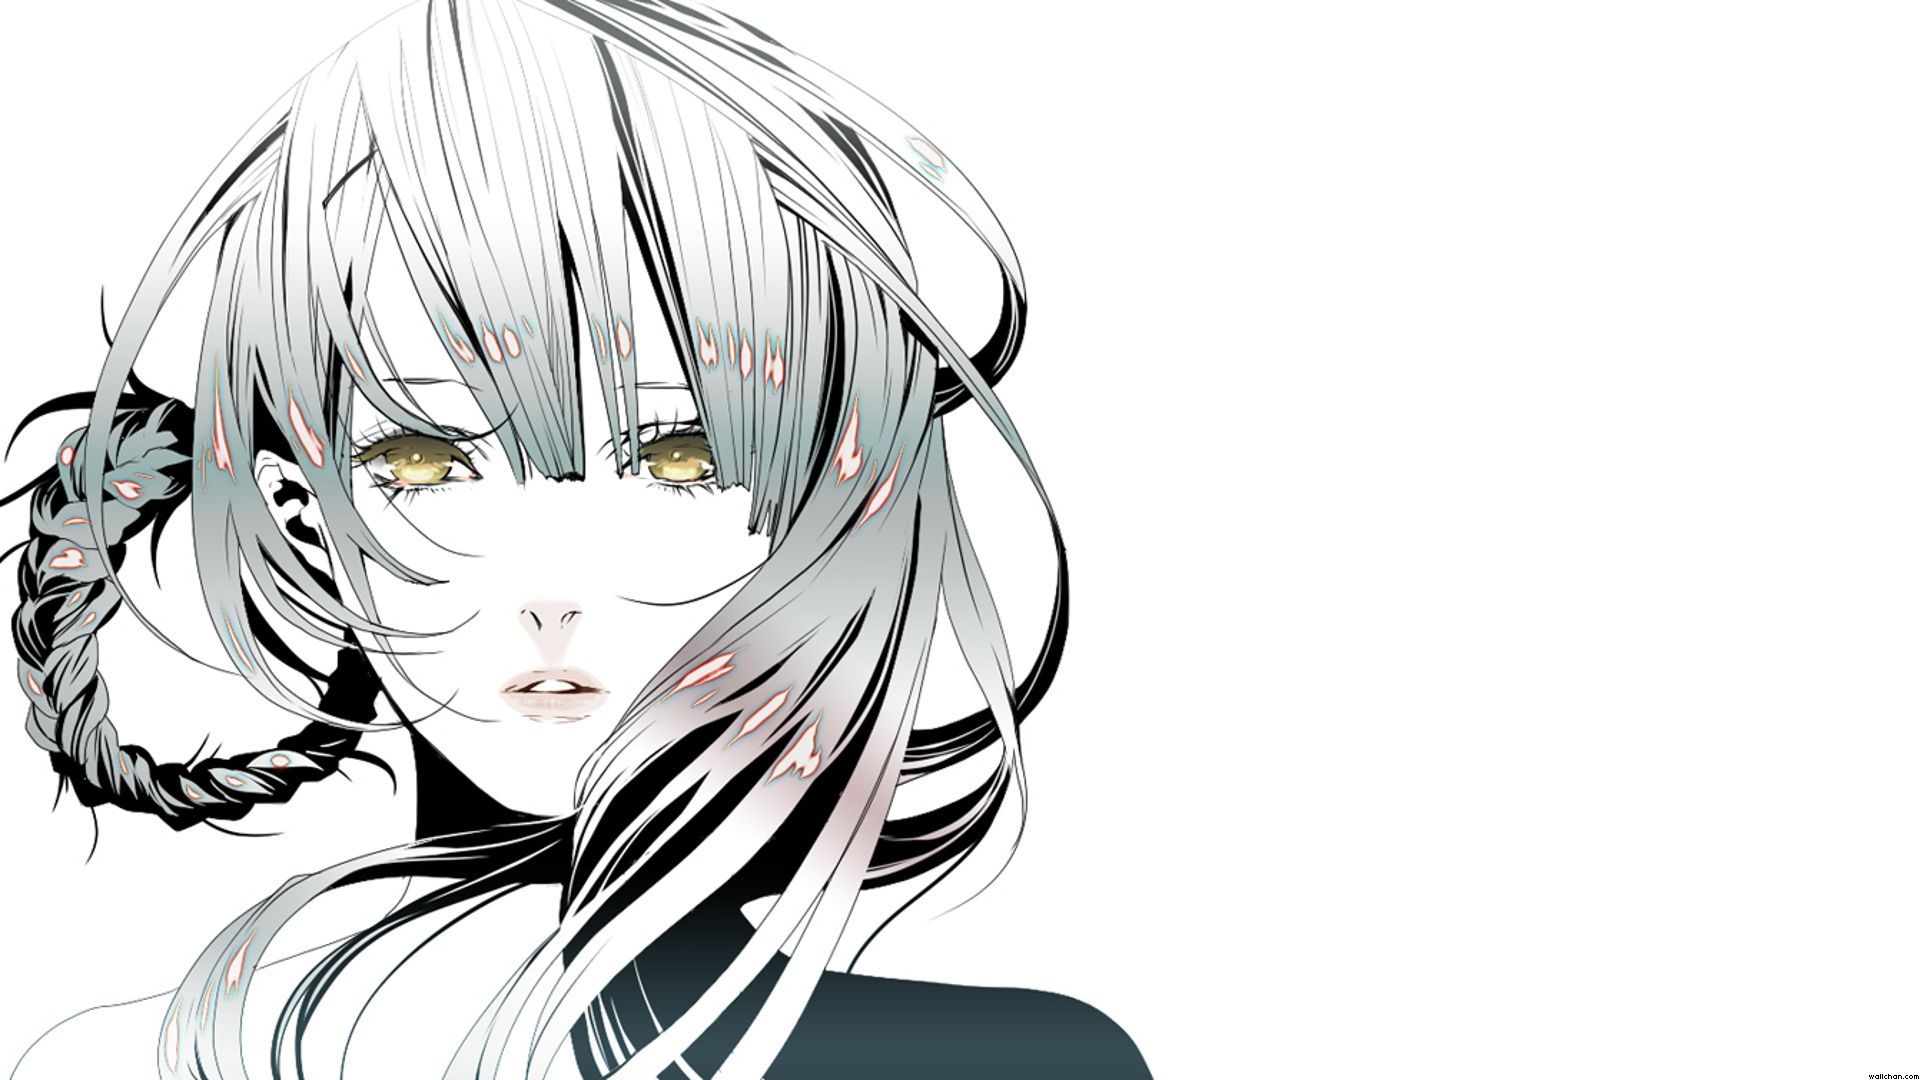 Cute-Anime-Girl-White-Background.jpg